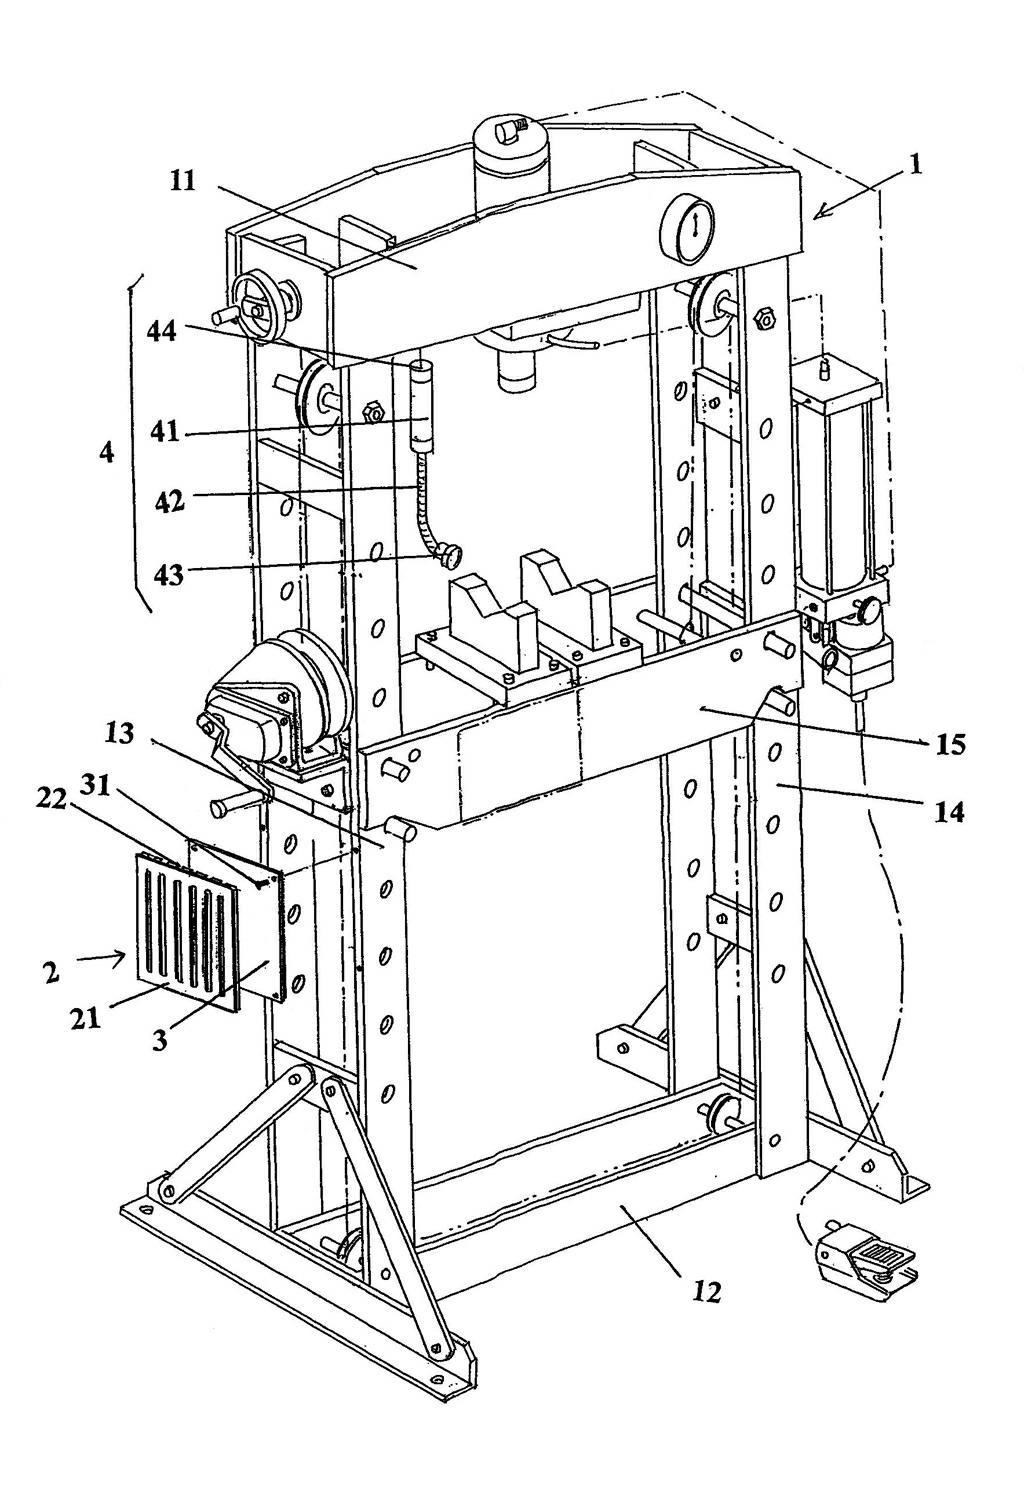 Hydraulic press machine of jack